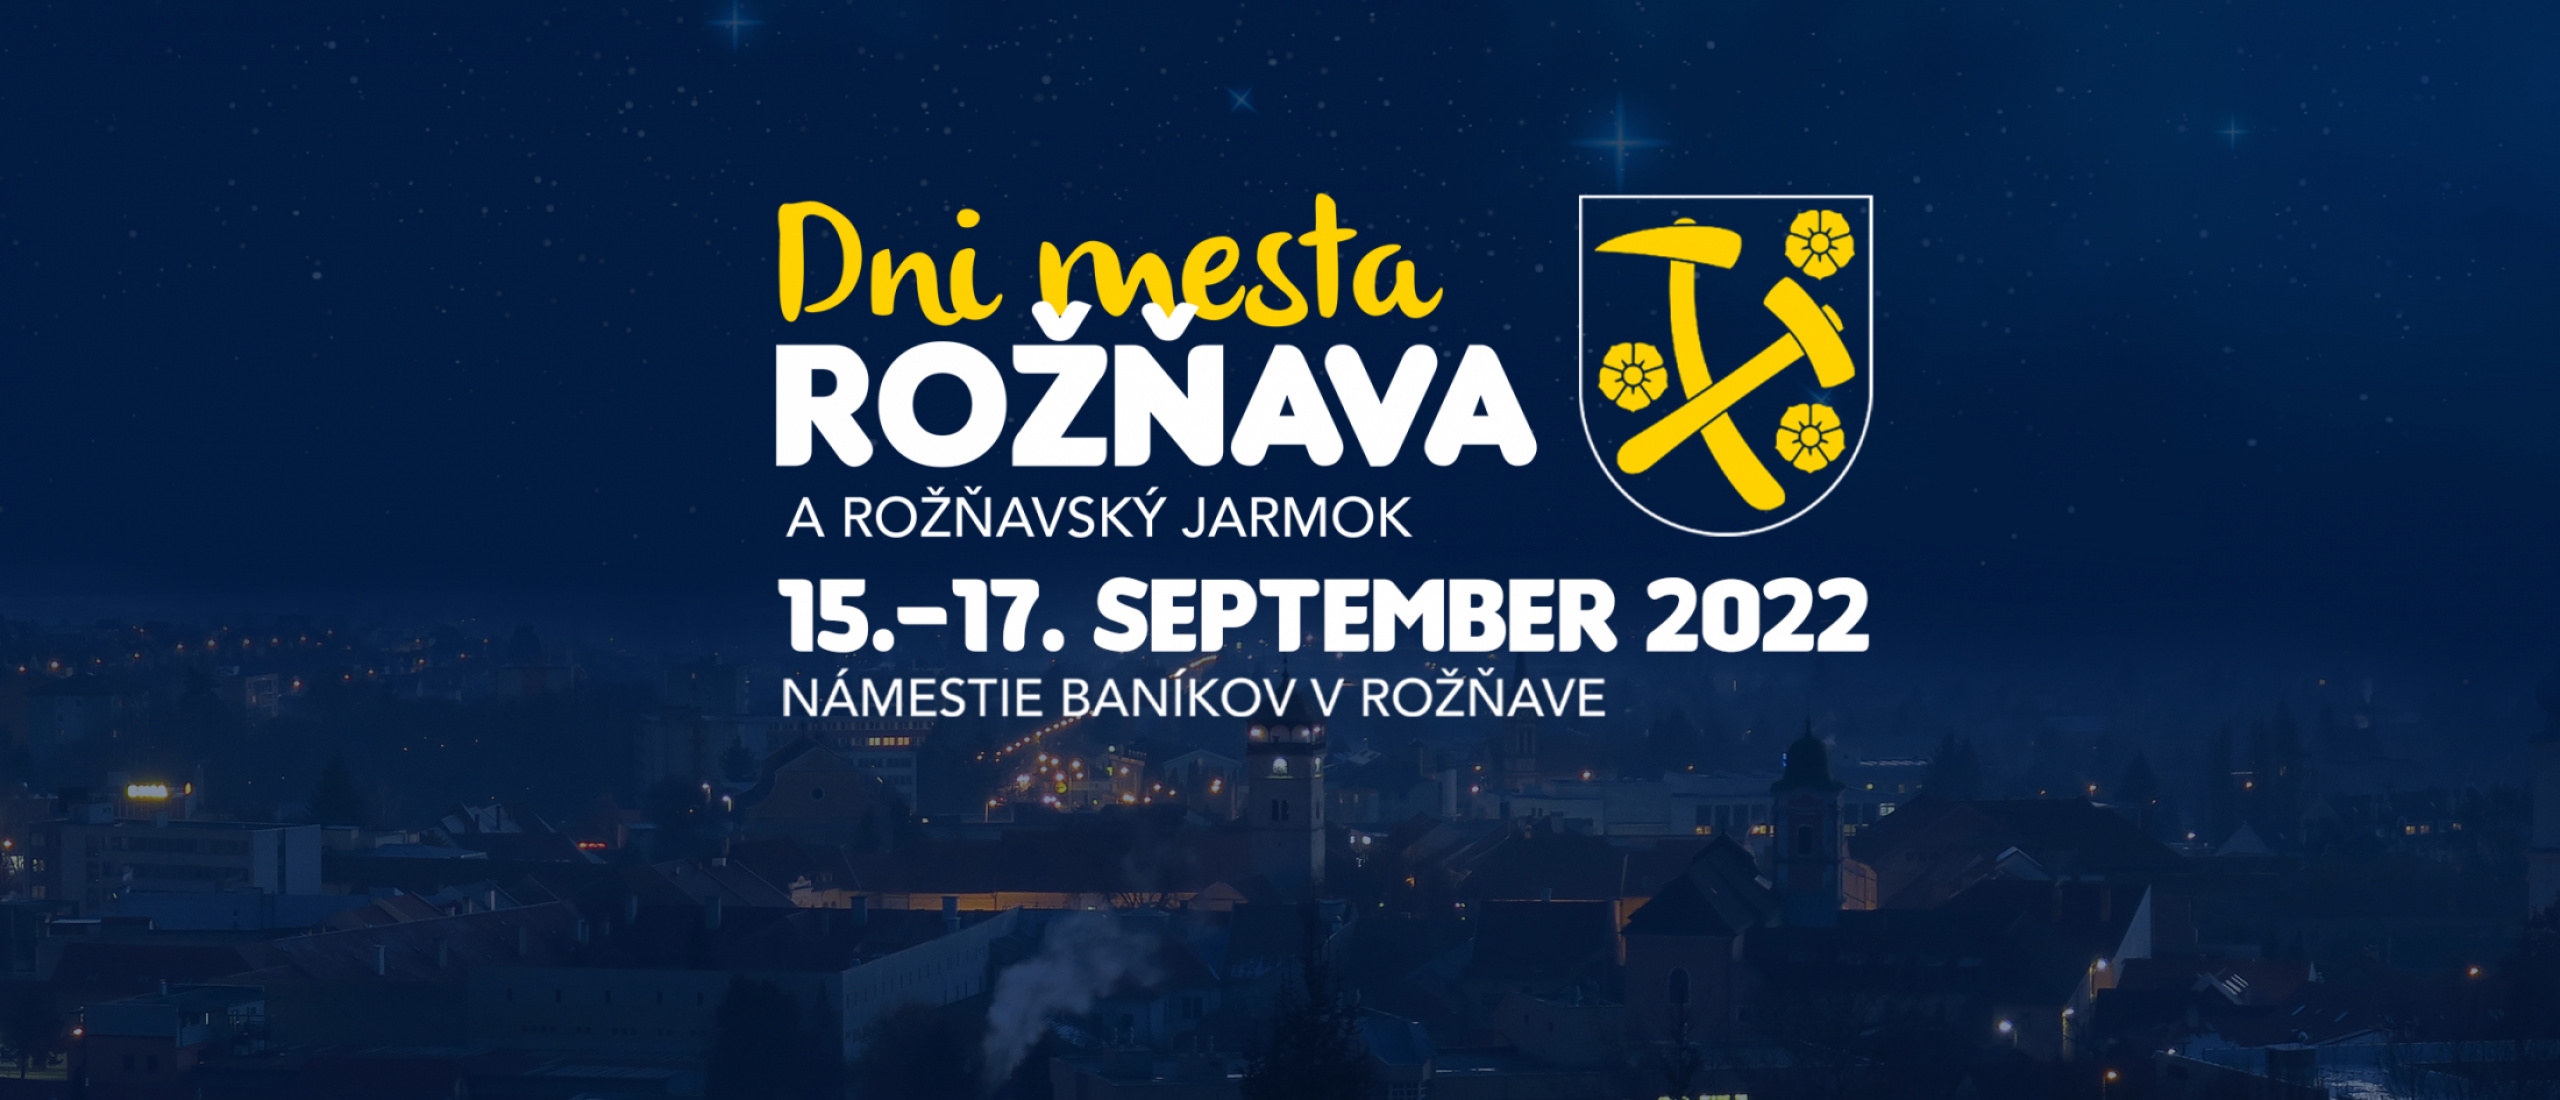 Dni mesta Roava a Roavsk jarmok 2022